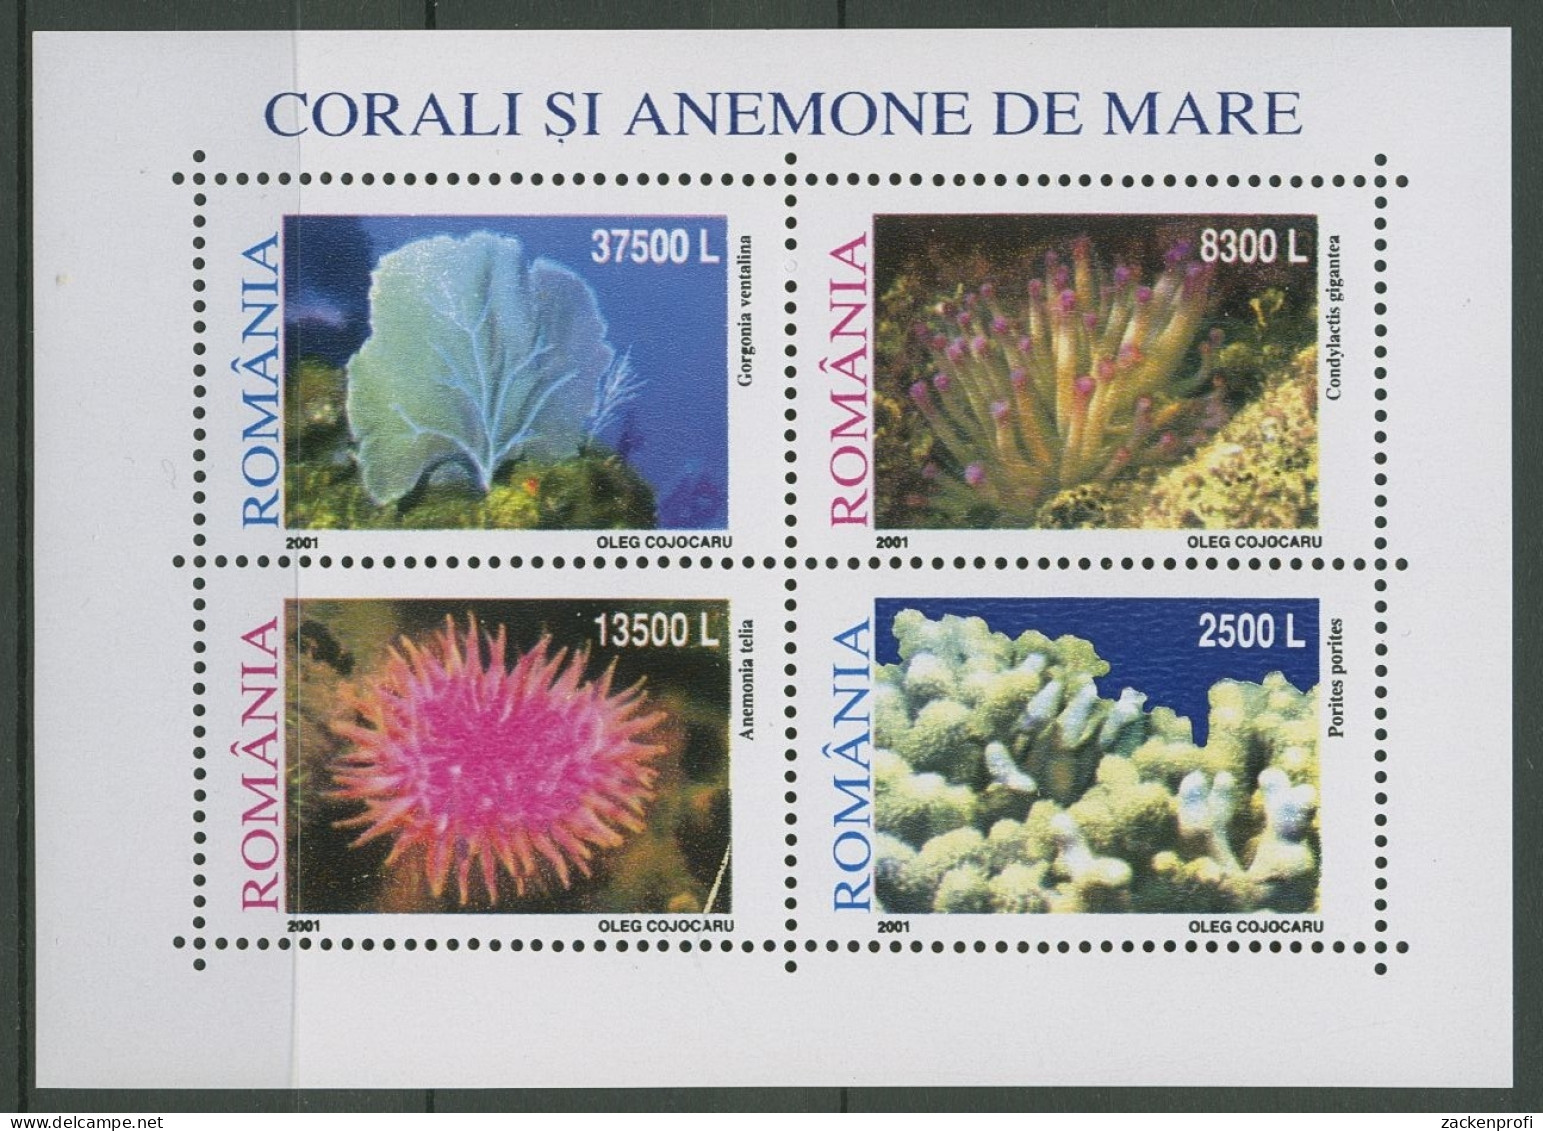 Rumänien 2001 Korallen Seeanemonen Block 318 Postfrisch (C92201) - Blocks & Sheetlets